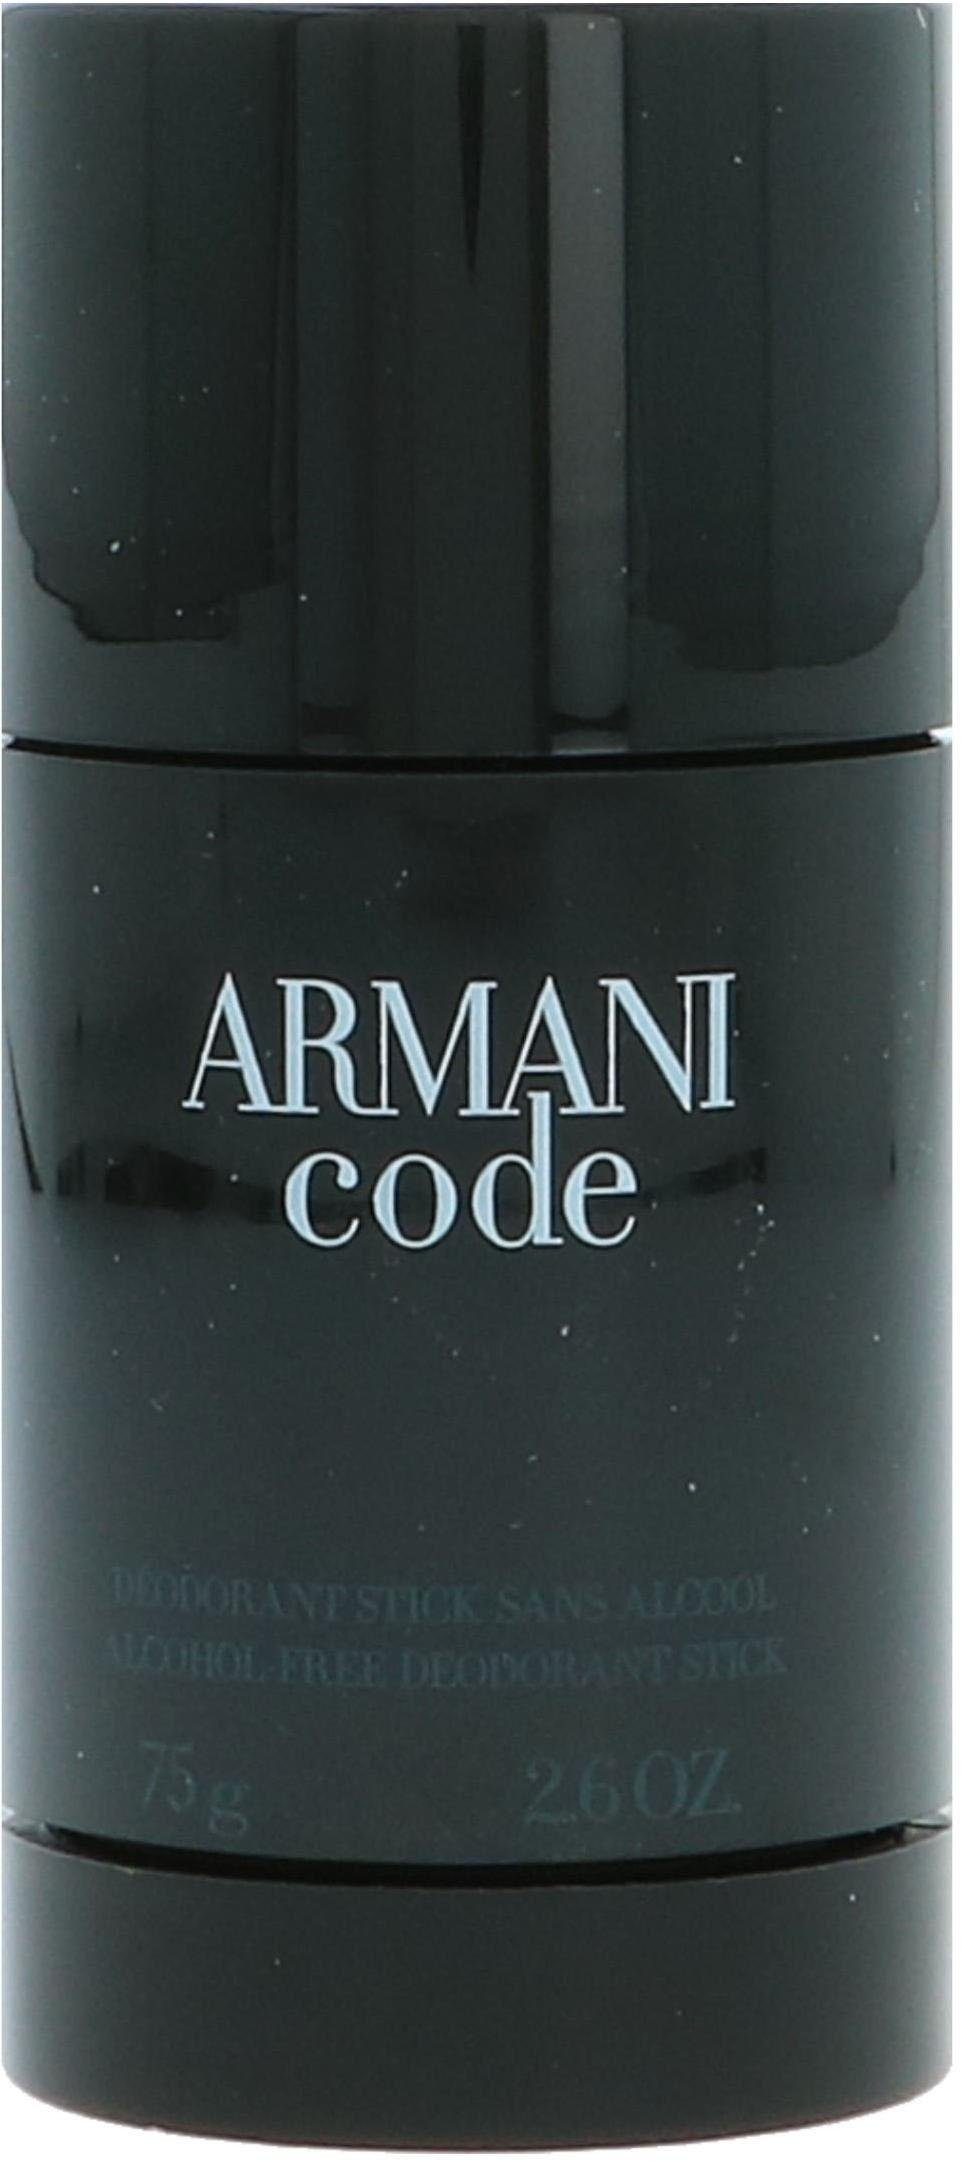 Giorgio Armani Deo-Stift Code pour Homme